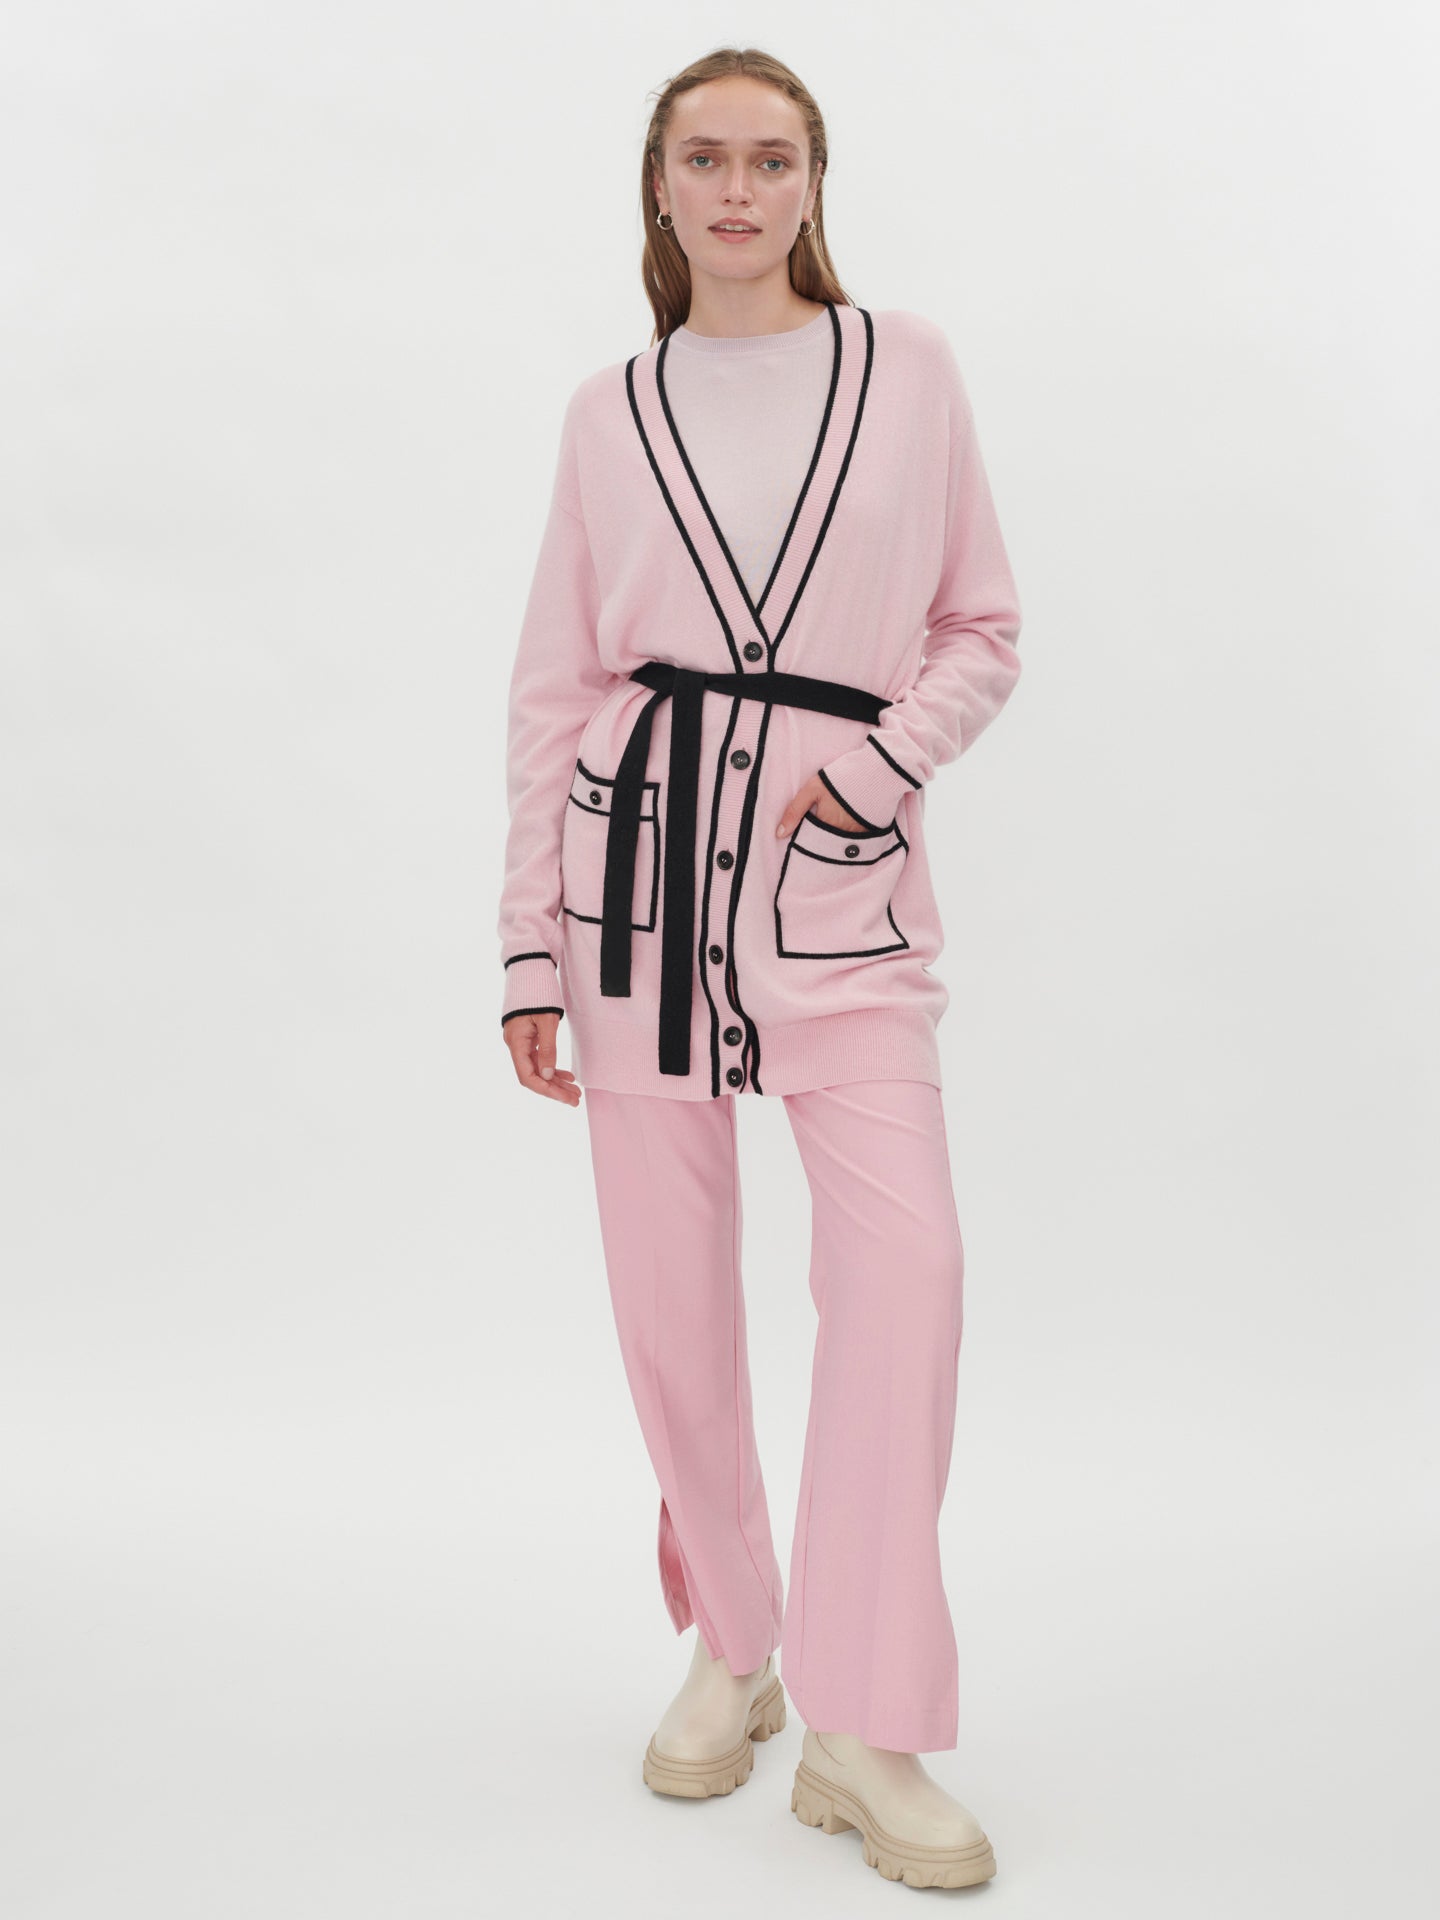 Zara Pink Tweed Chanel Dupe Long Sleeve Jacket Dress S  eBay